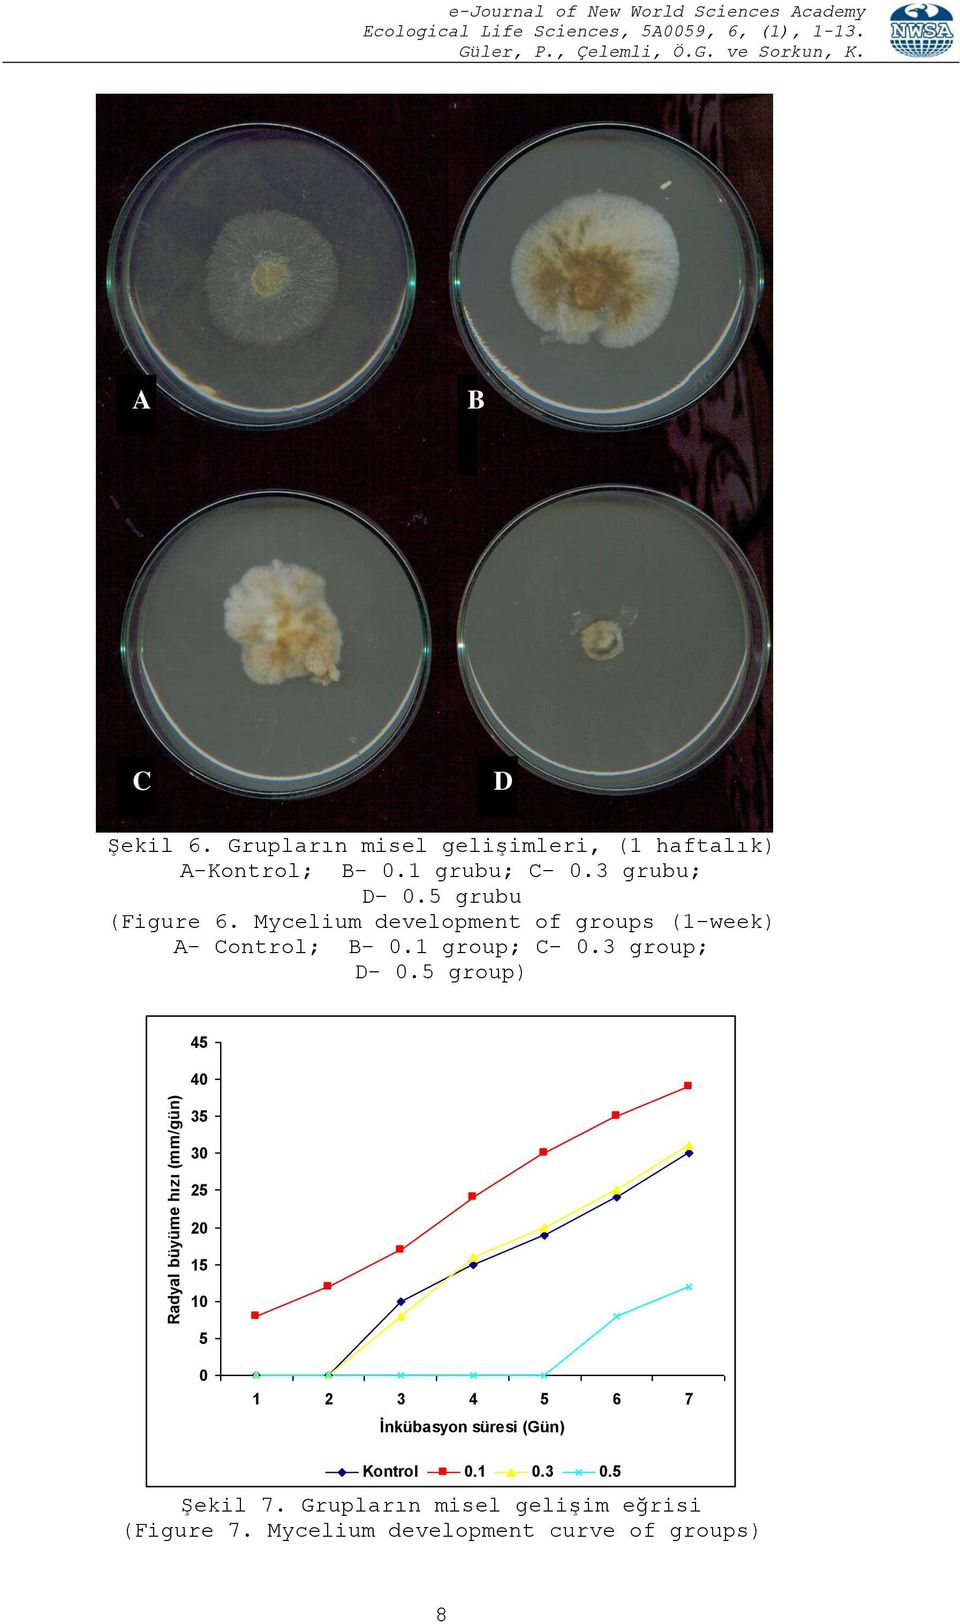 Mycelium development of groups (1-week) A- Control; B- 0.1 group; C- 0.3 group; D- 0.